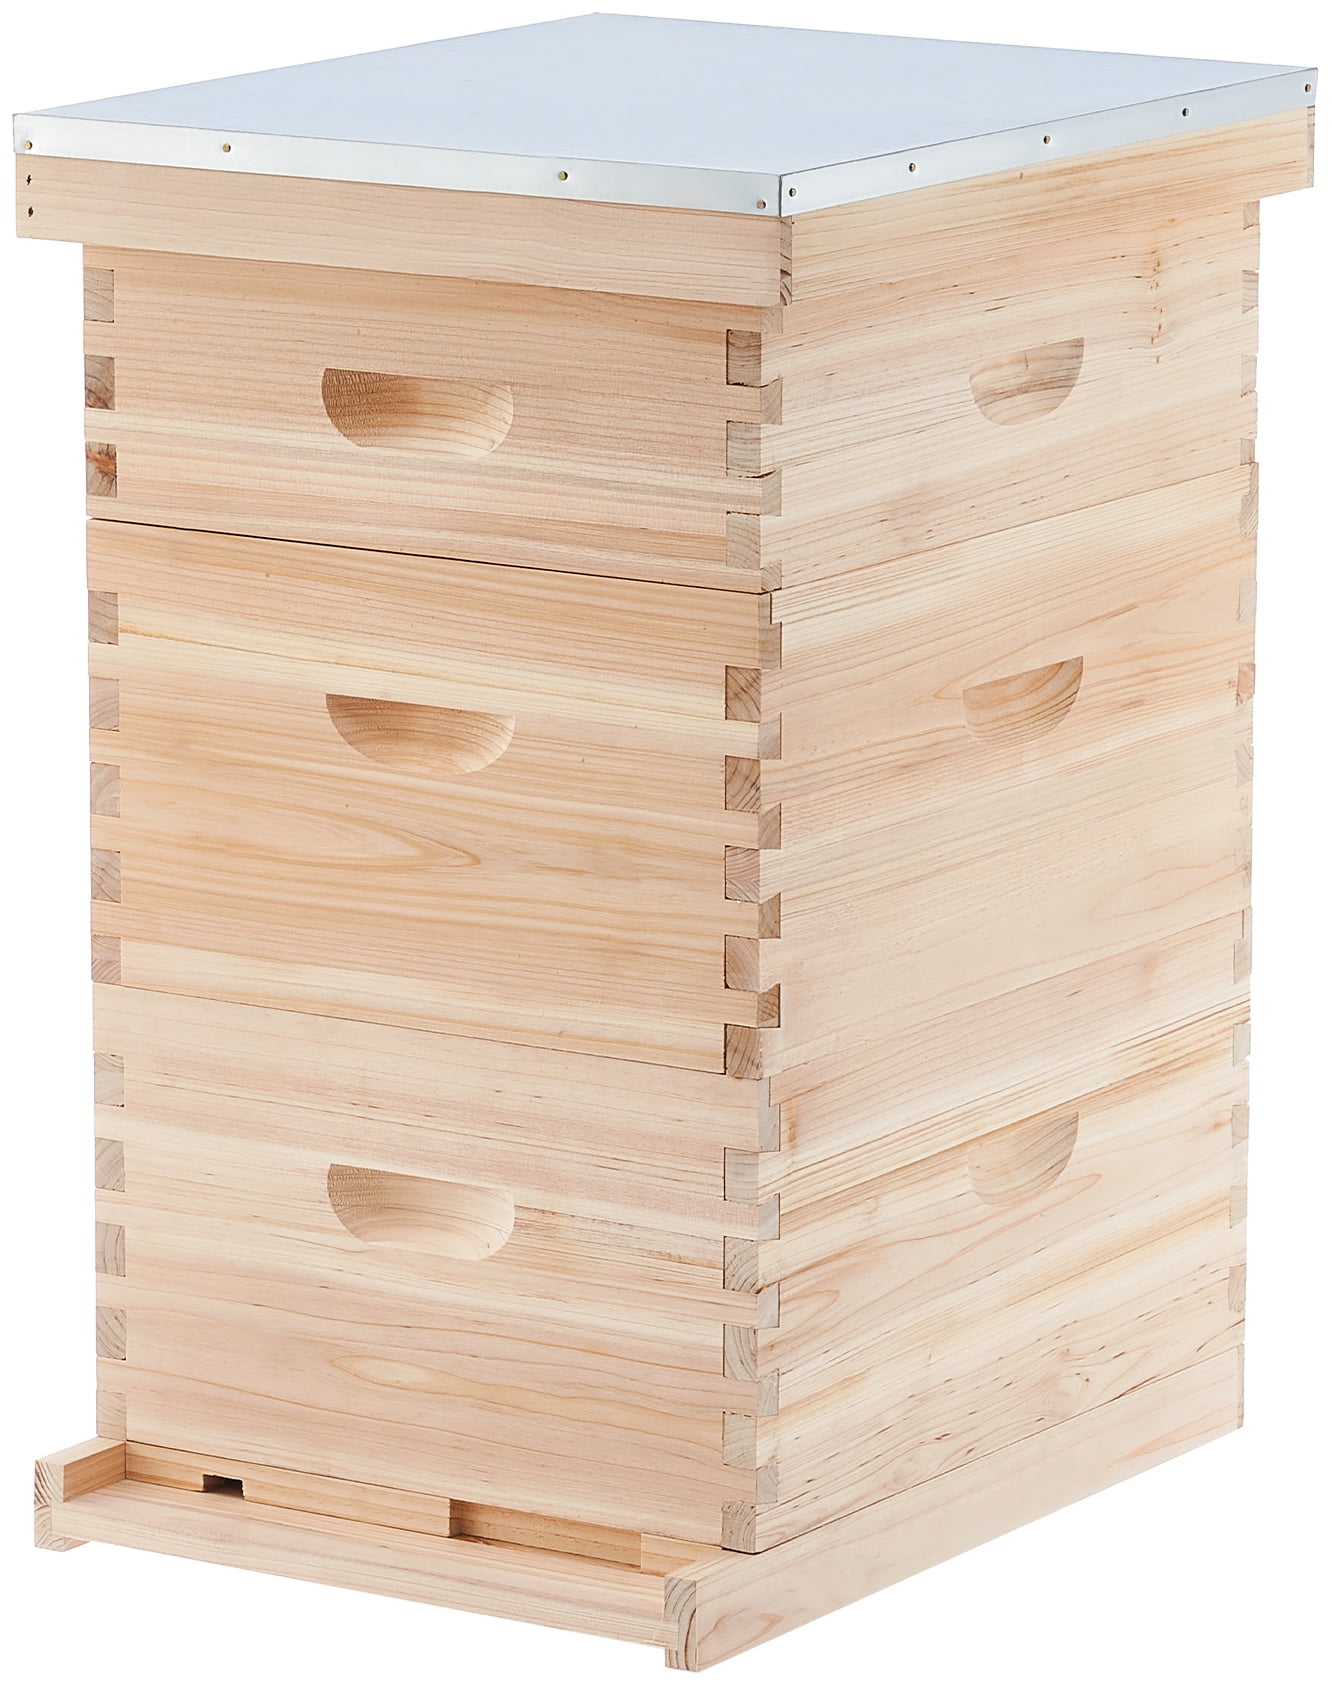 12 pcs/pack Beekeepers Bee hive Nuc box Entrance gates Beekeeping Equipment_NIU 